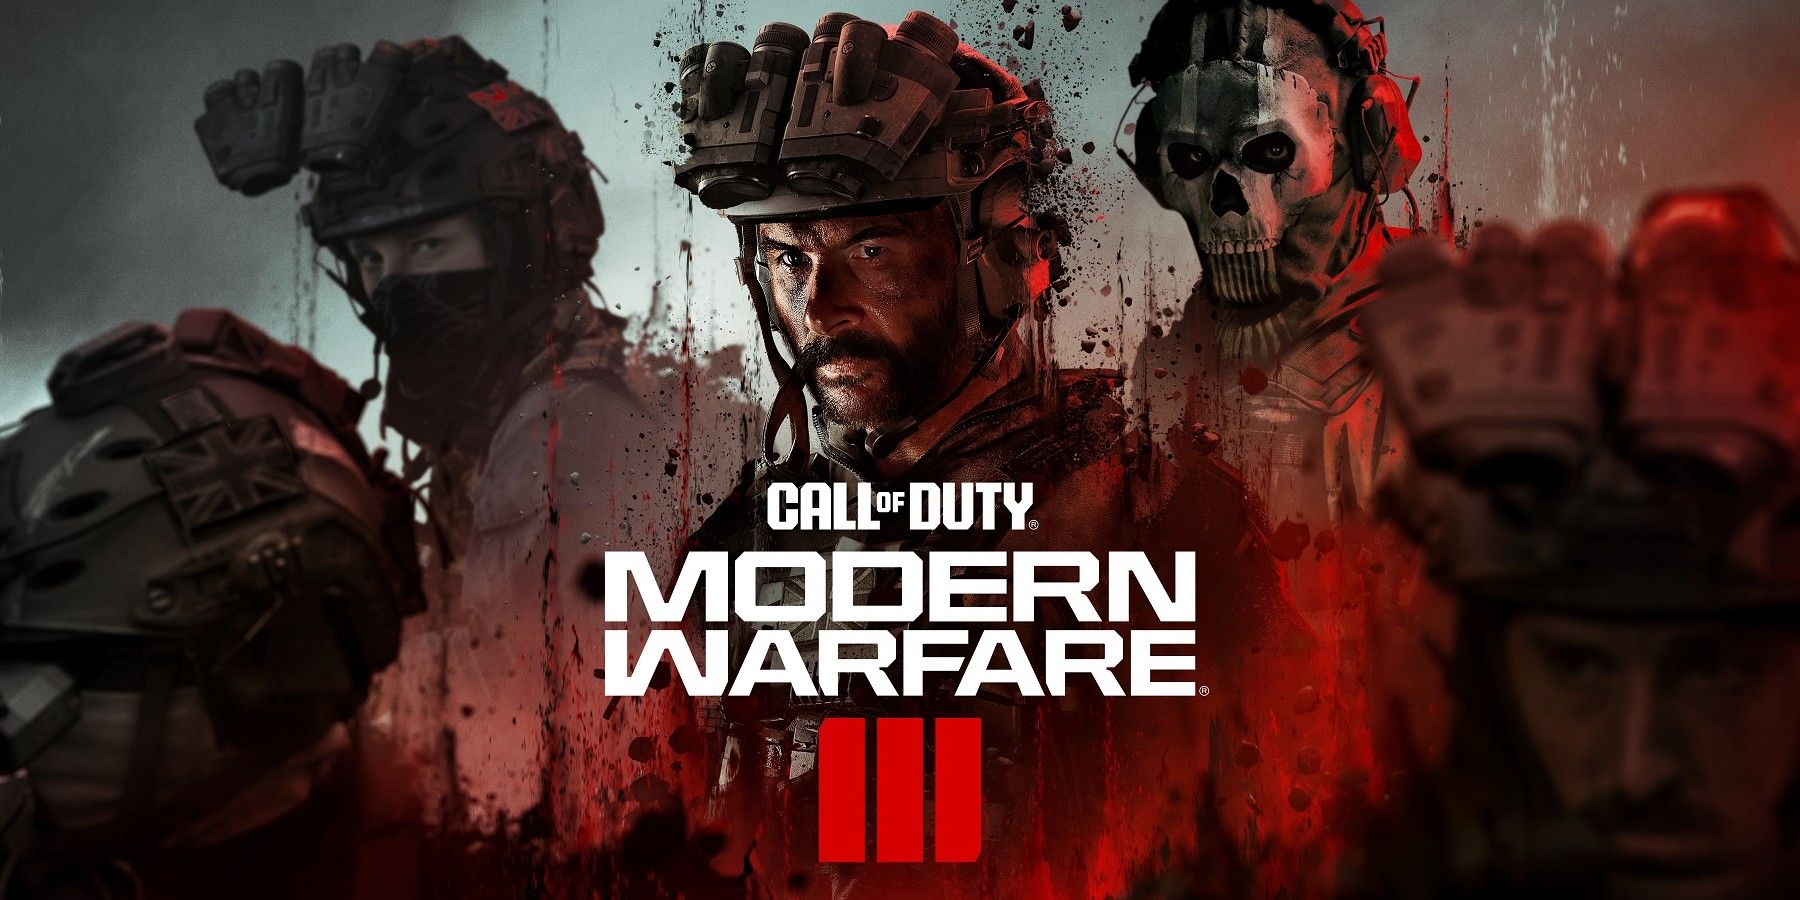 Modern Warfare 3 Operators - All characters in multiplayer